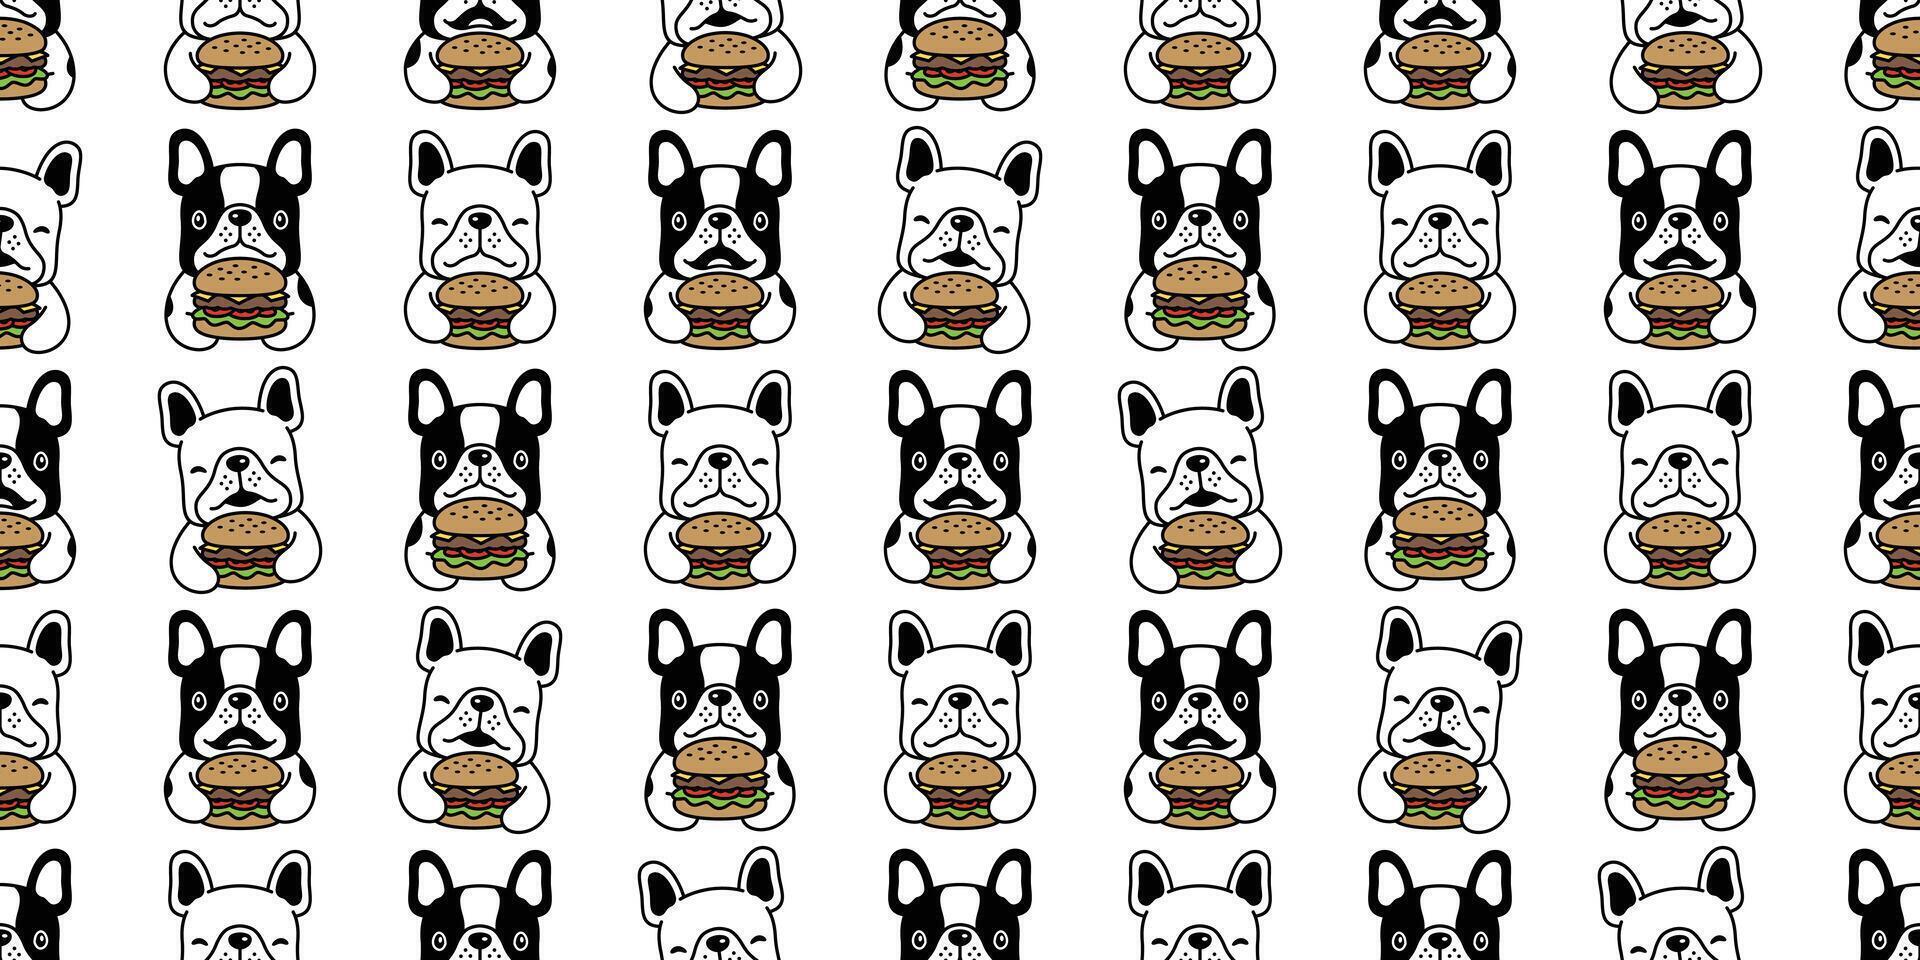 perro sin costura modelo francés buldog vector hamburguesa comida perrito mascota repetir fondo de pantalla bufanda aislado dibujos animados garabatear loseta antecedentes ilustración diseño